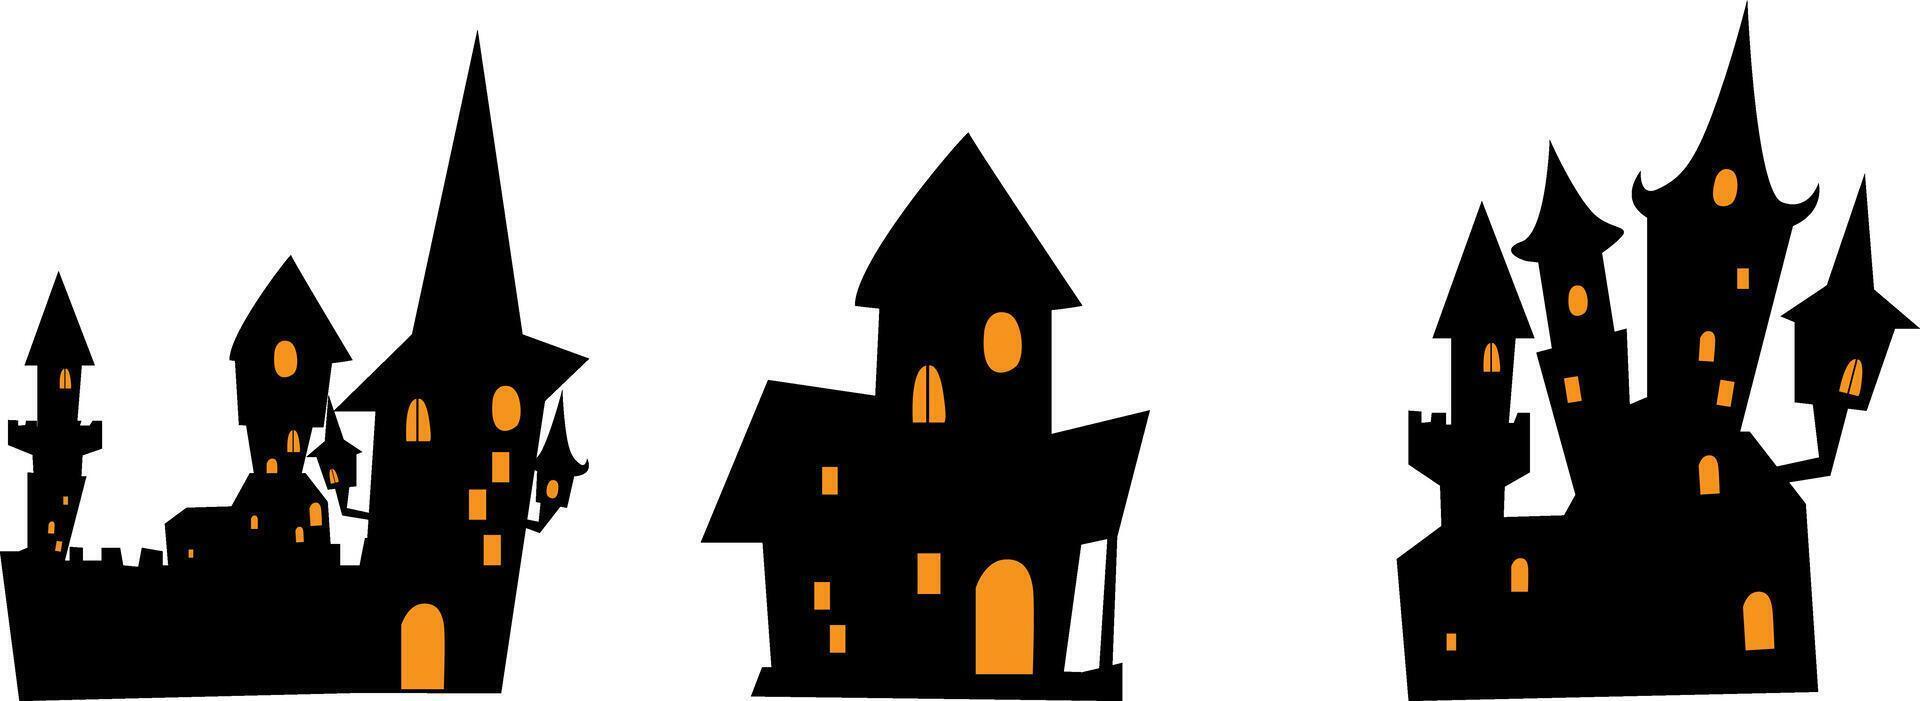 Beautiful Halloween home design background Vector illustration